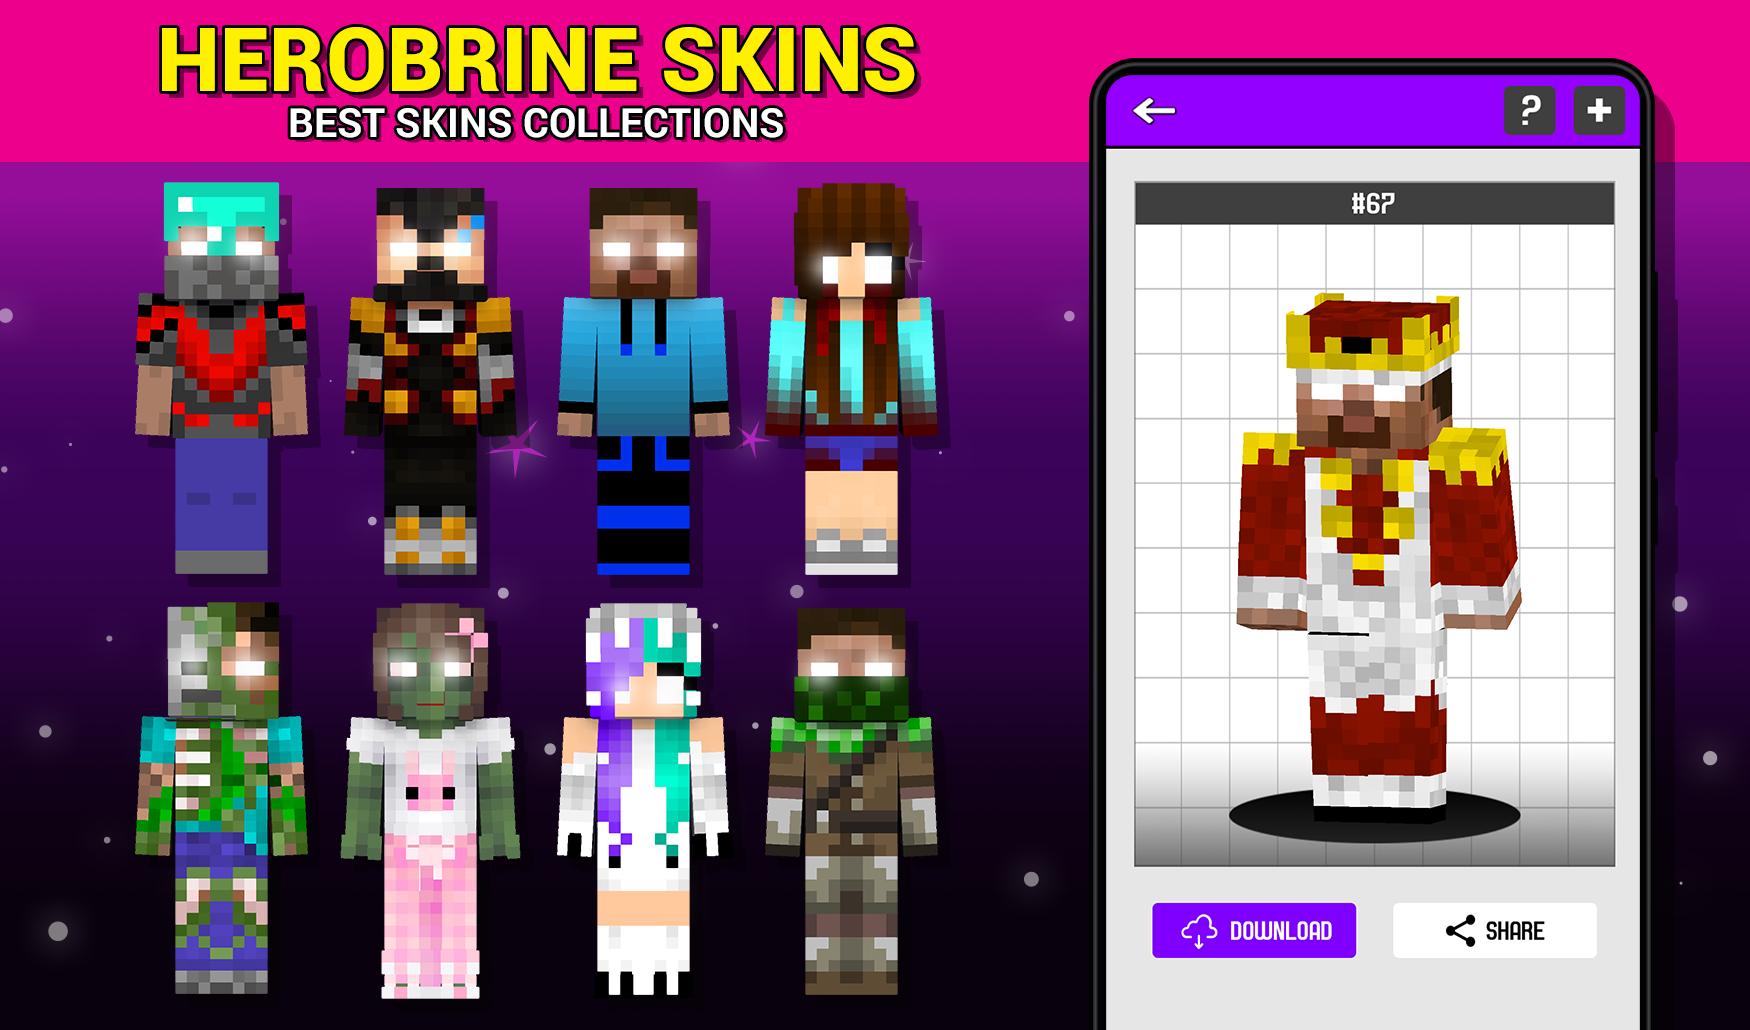 New Herobrine Skins for Android - Download